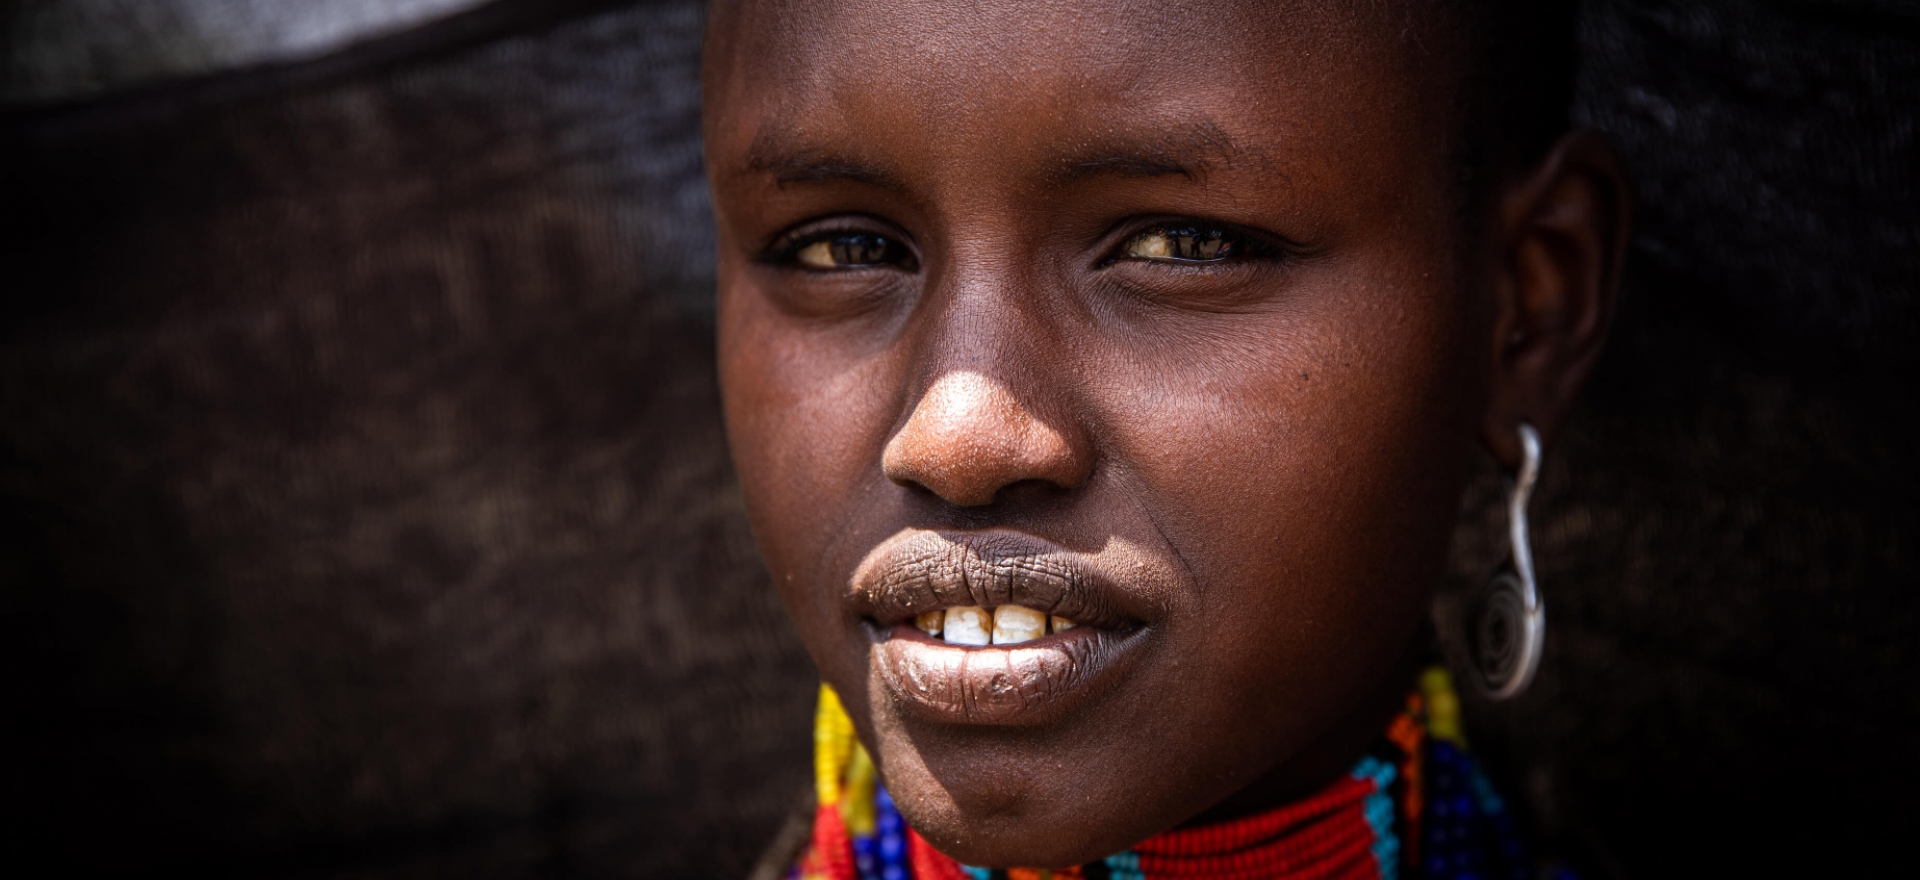 Kmen Arbore, Jižní Etiopie - Planeta lidí